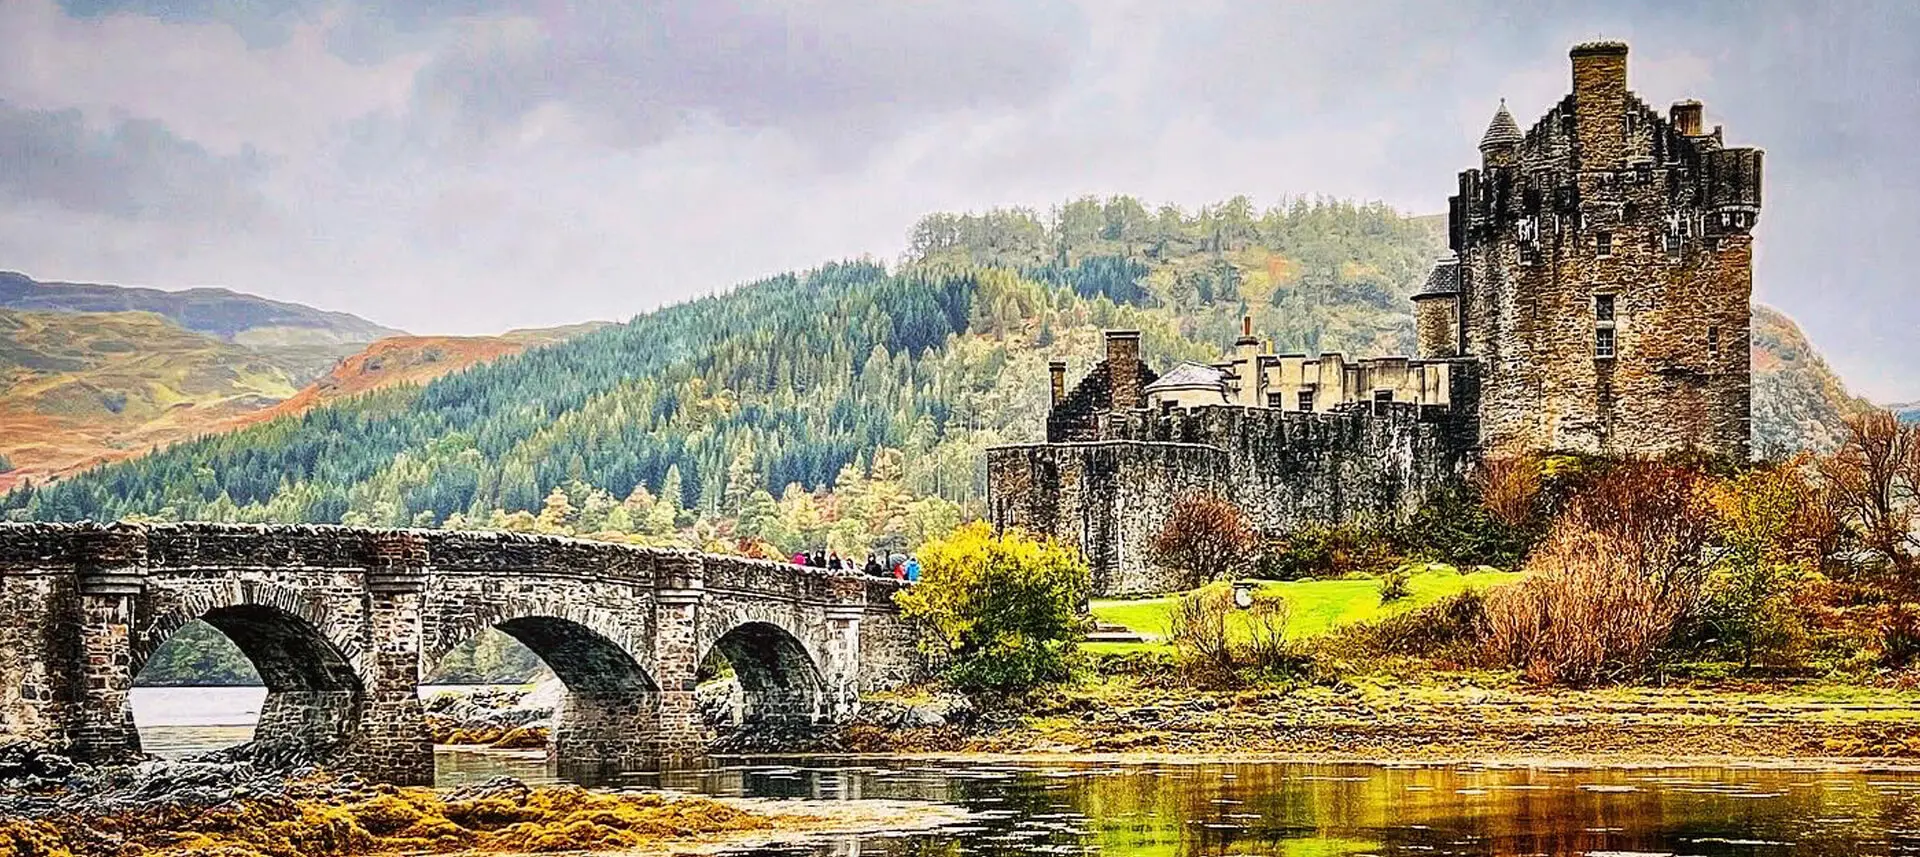 A bridge over water near a castle.